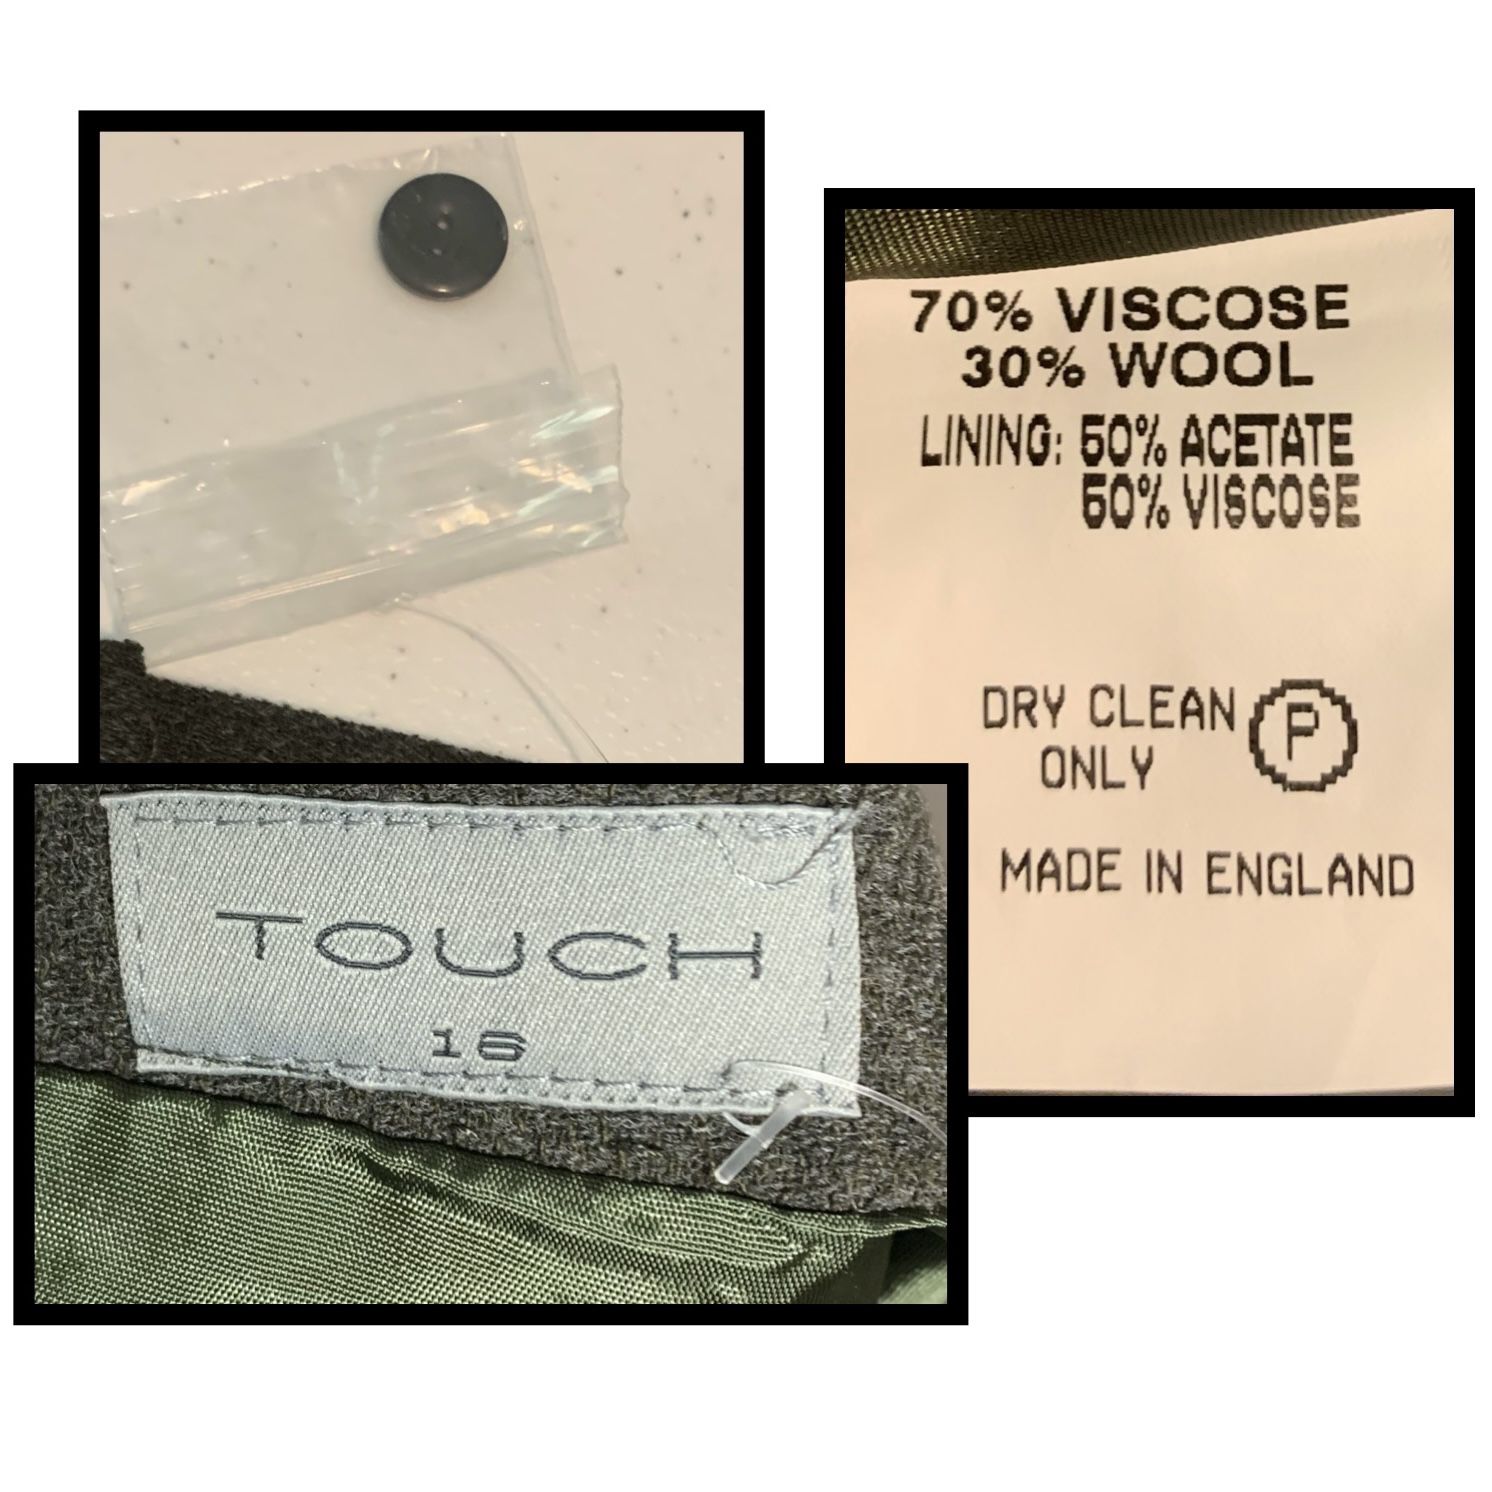 [Sz 16] NWT Touch Dark Gray Wool Blend Mini Pencil Skirt